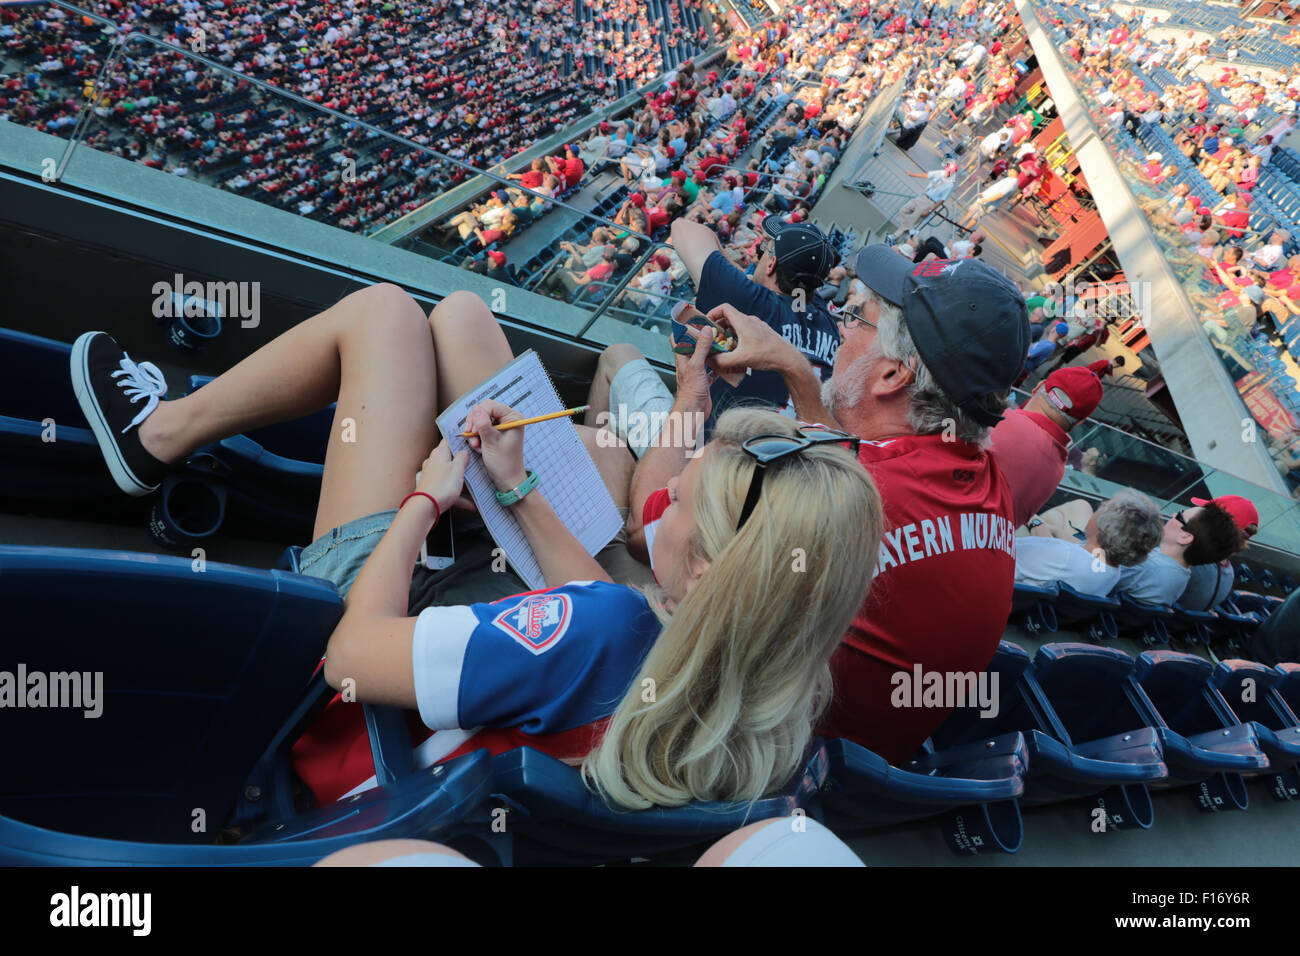 Scoring a baseball game Stock Photo